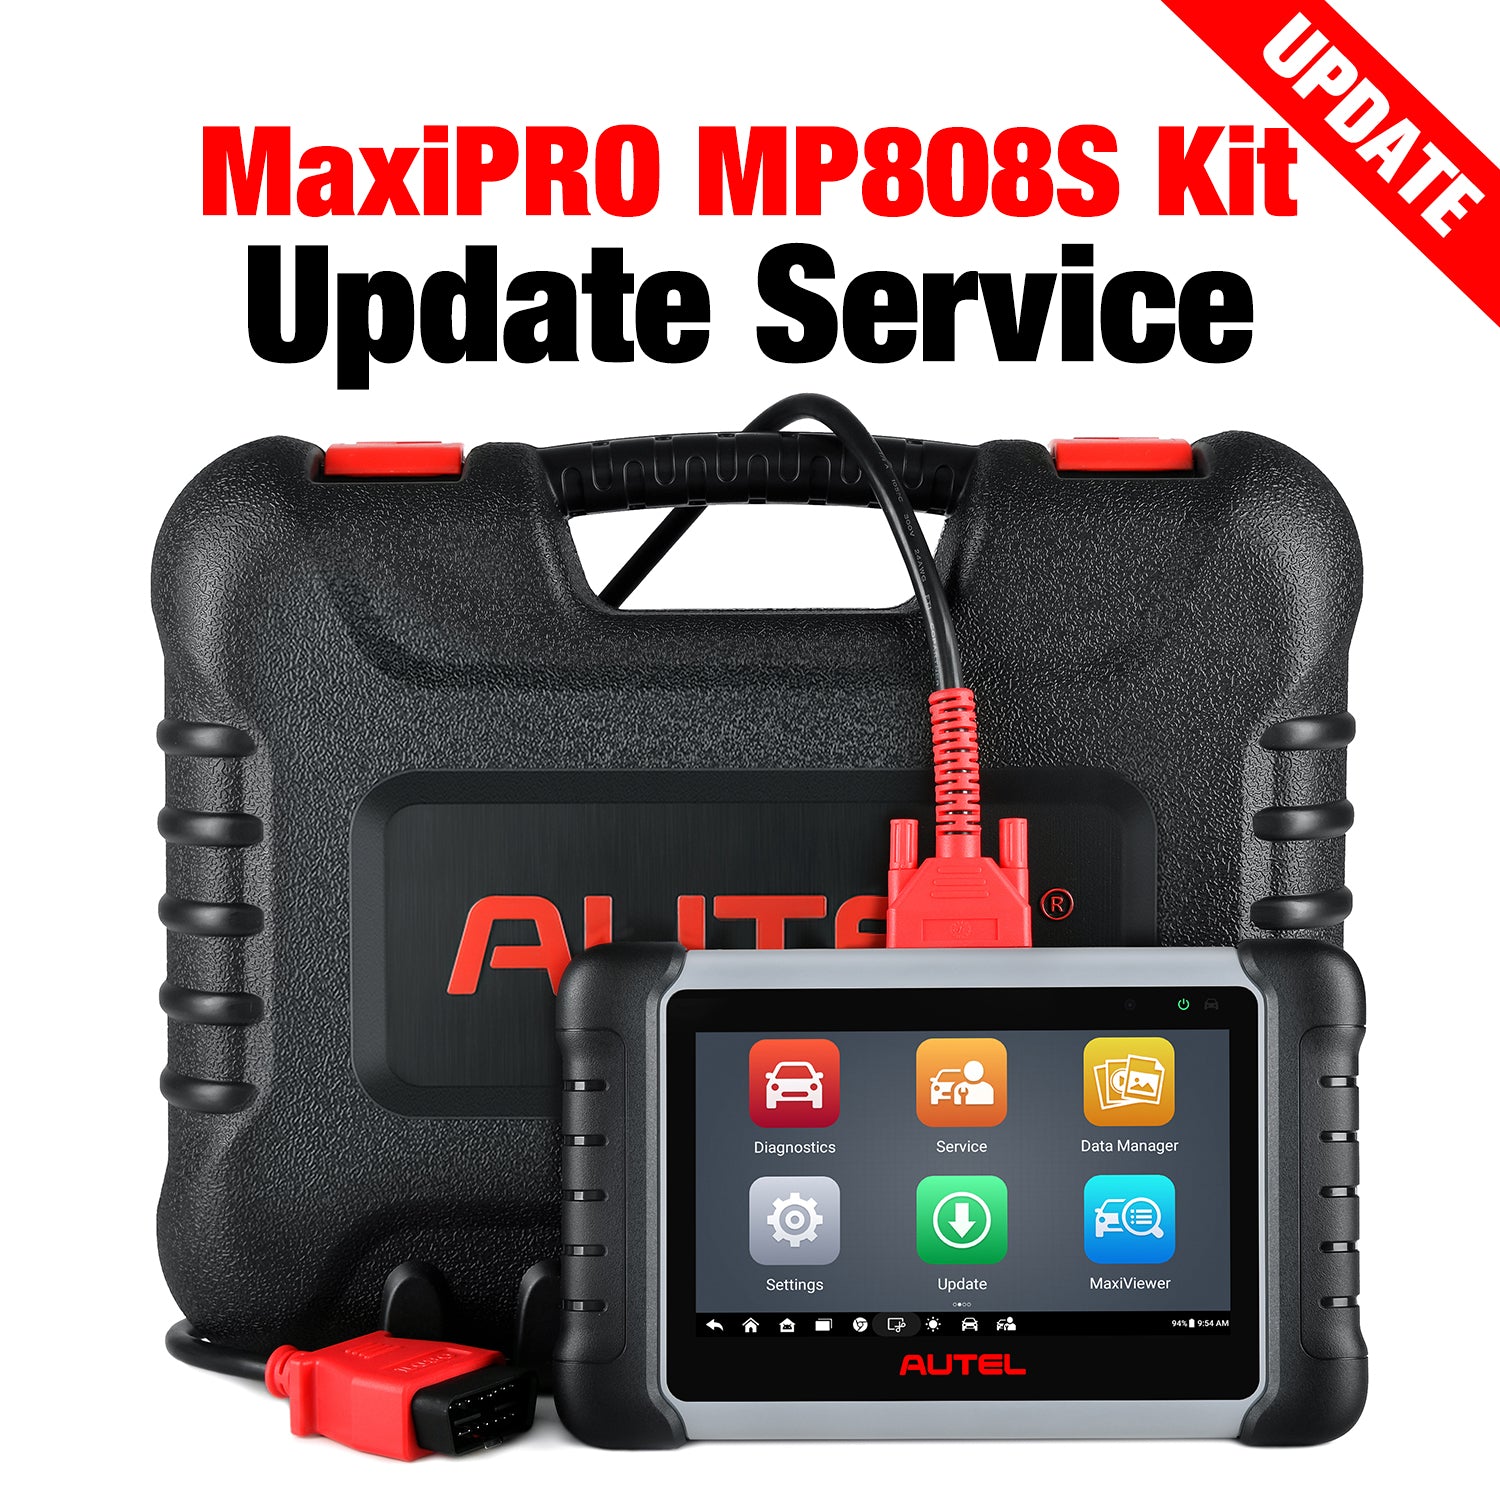 MaxiPro MP808S Kit Update Service